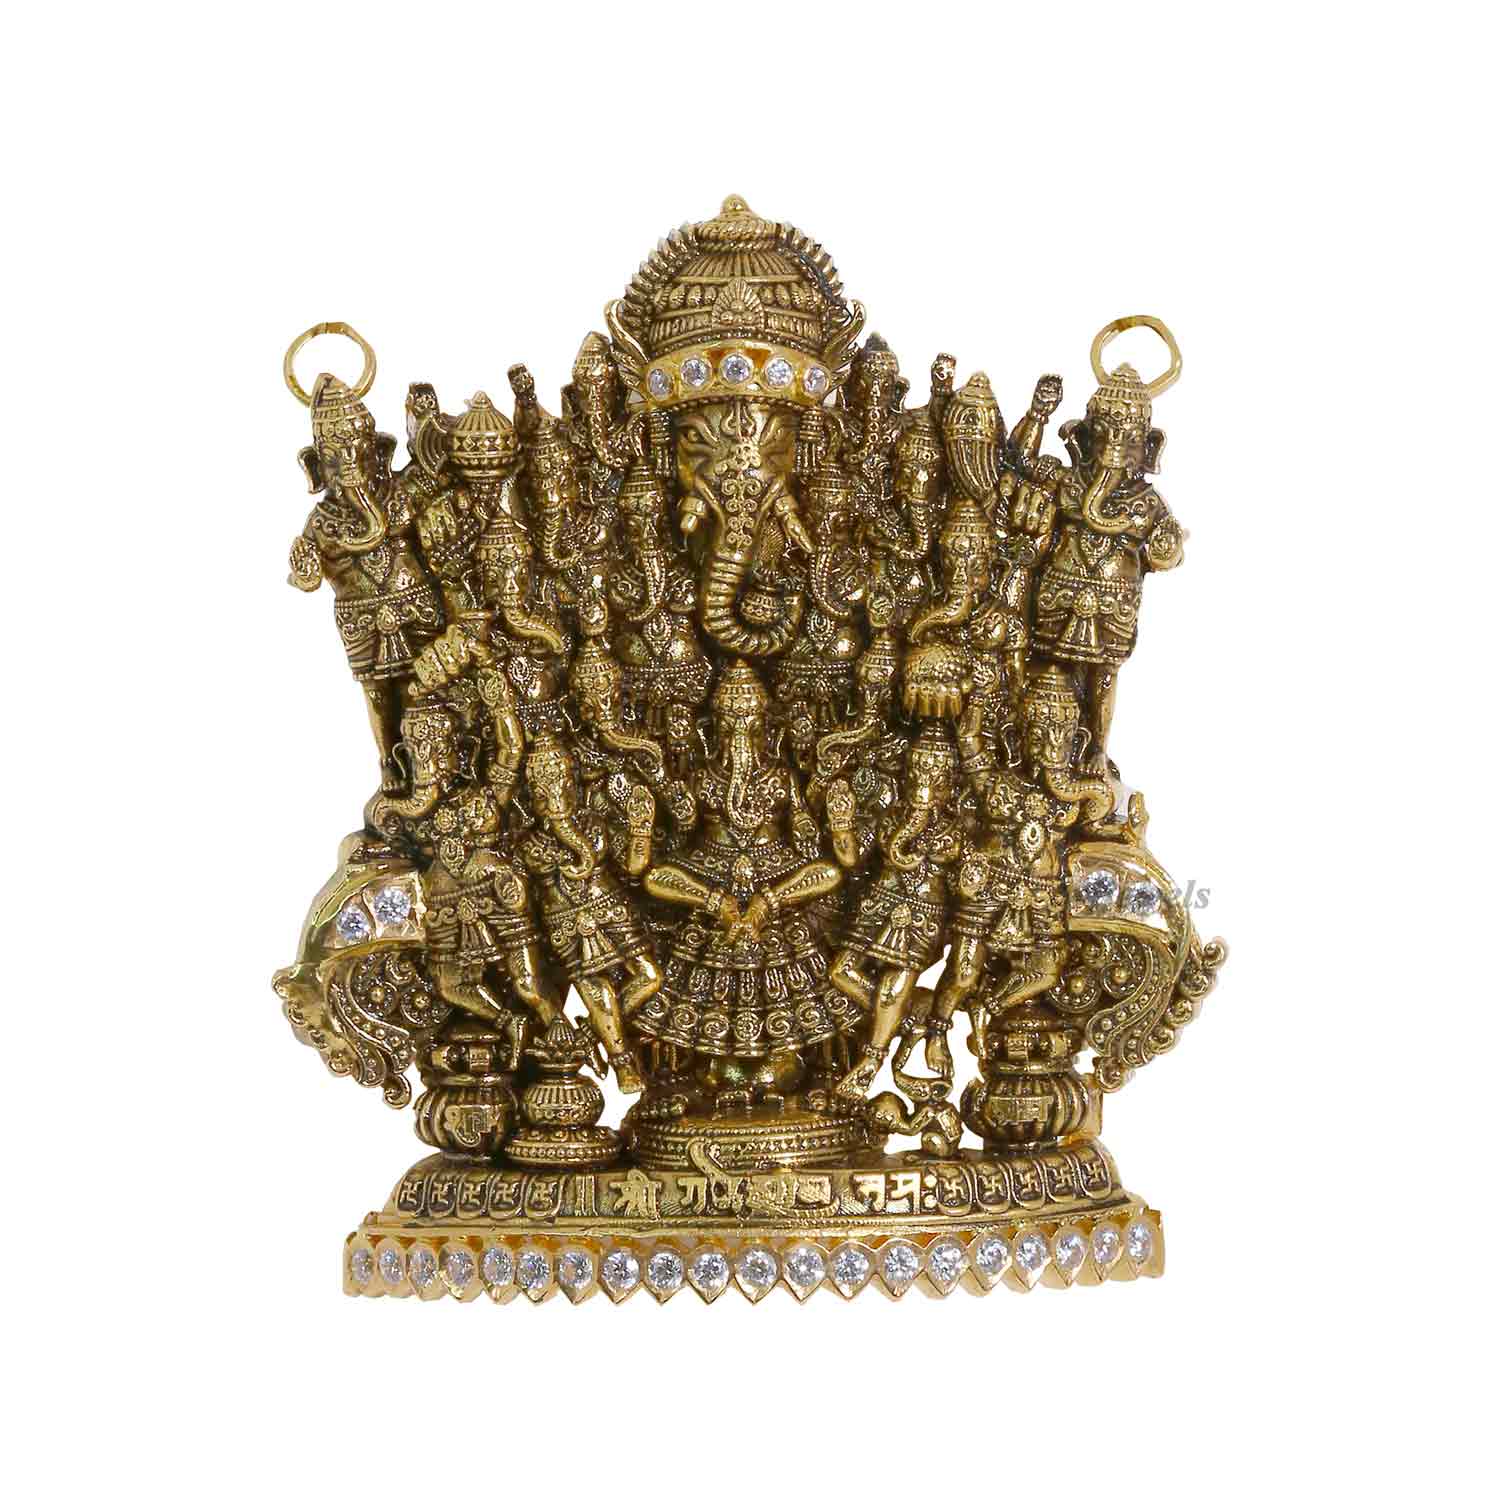 Lord Ganesha Avathar pendant